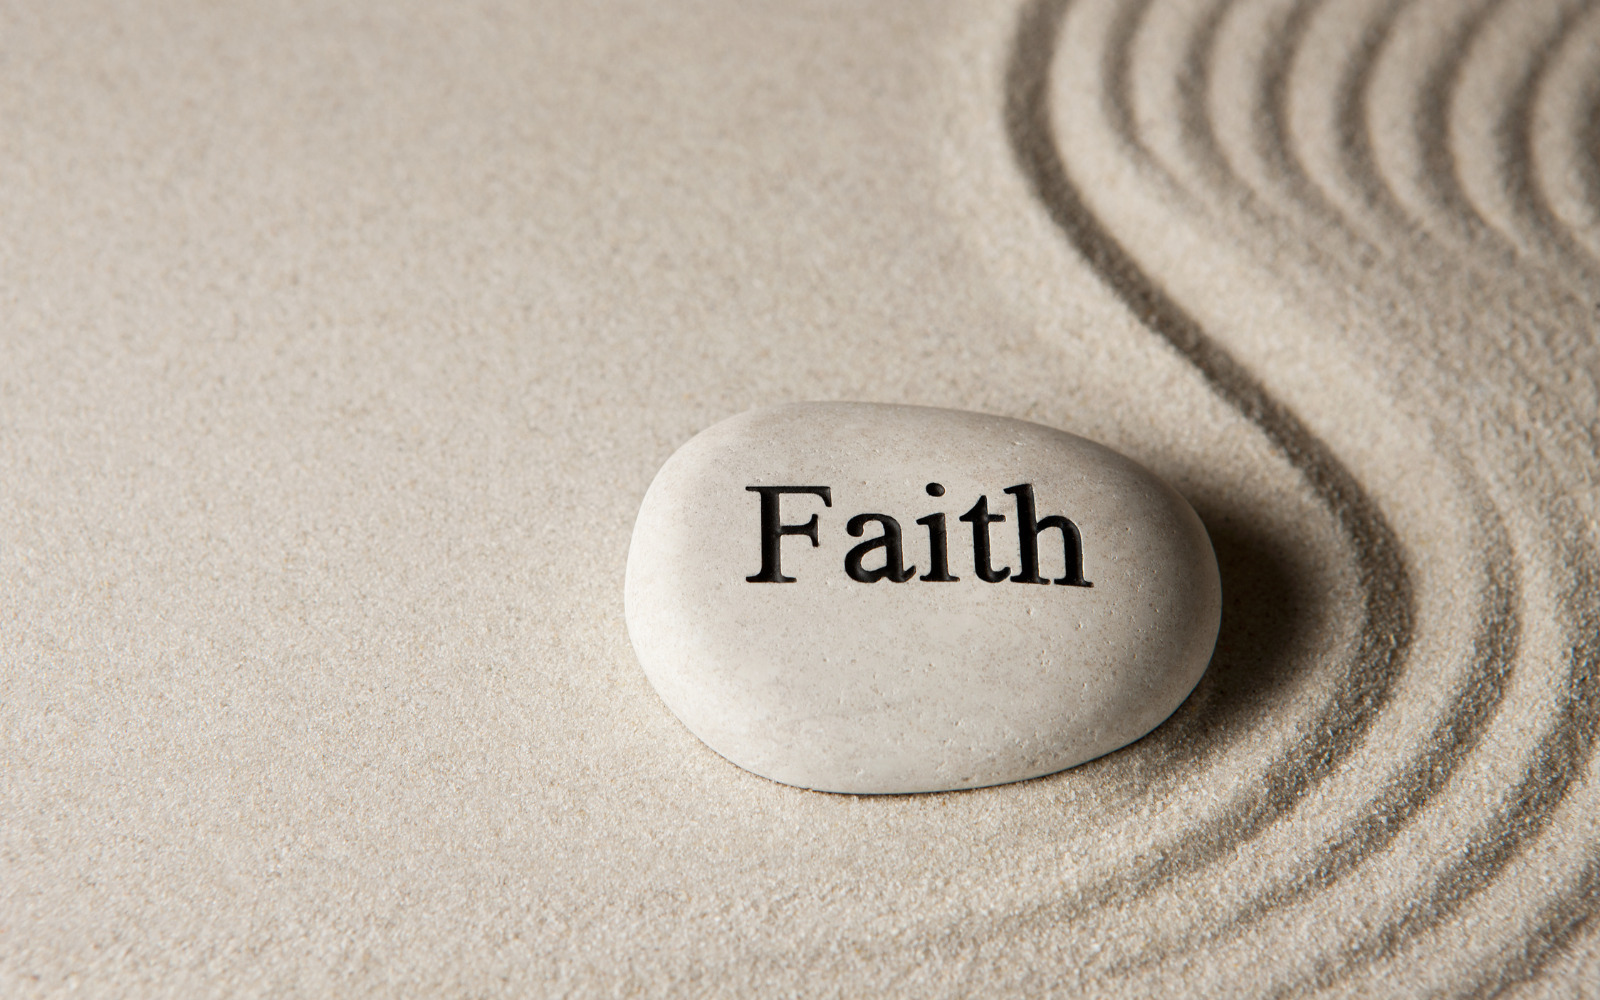 A pebble on carefully sculped sand. The pebble has the word 'Faith' written on it.